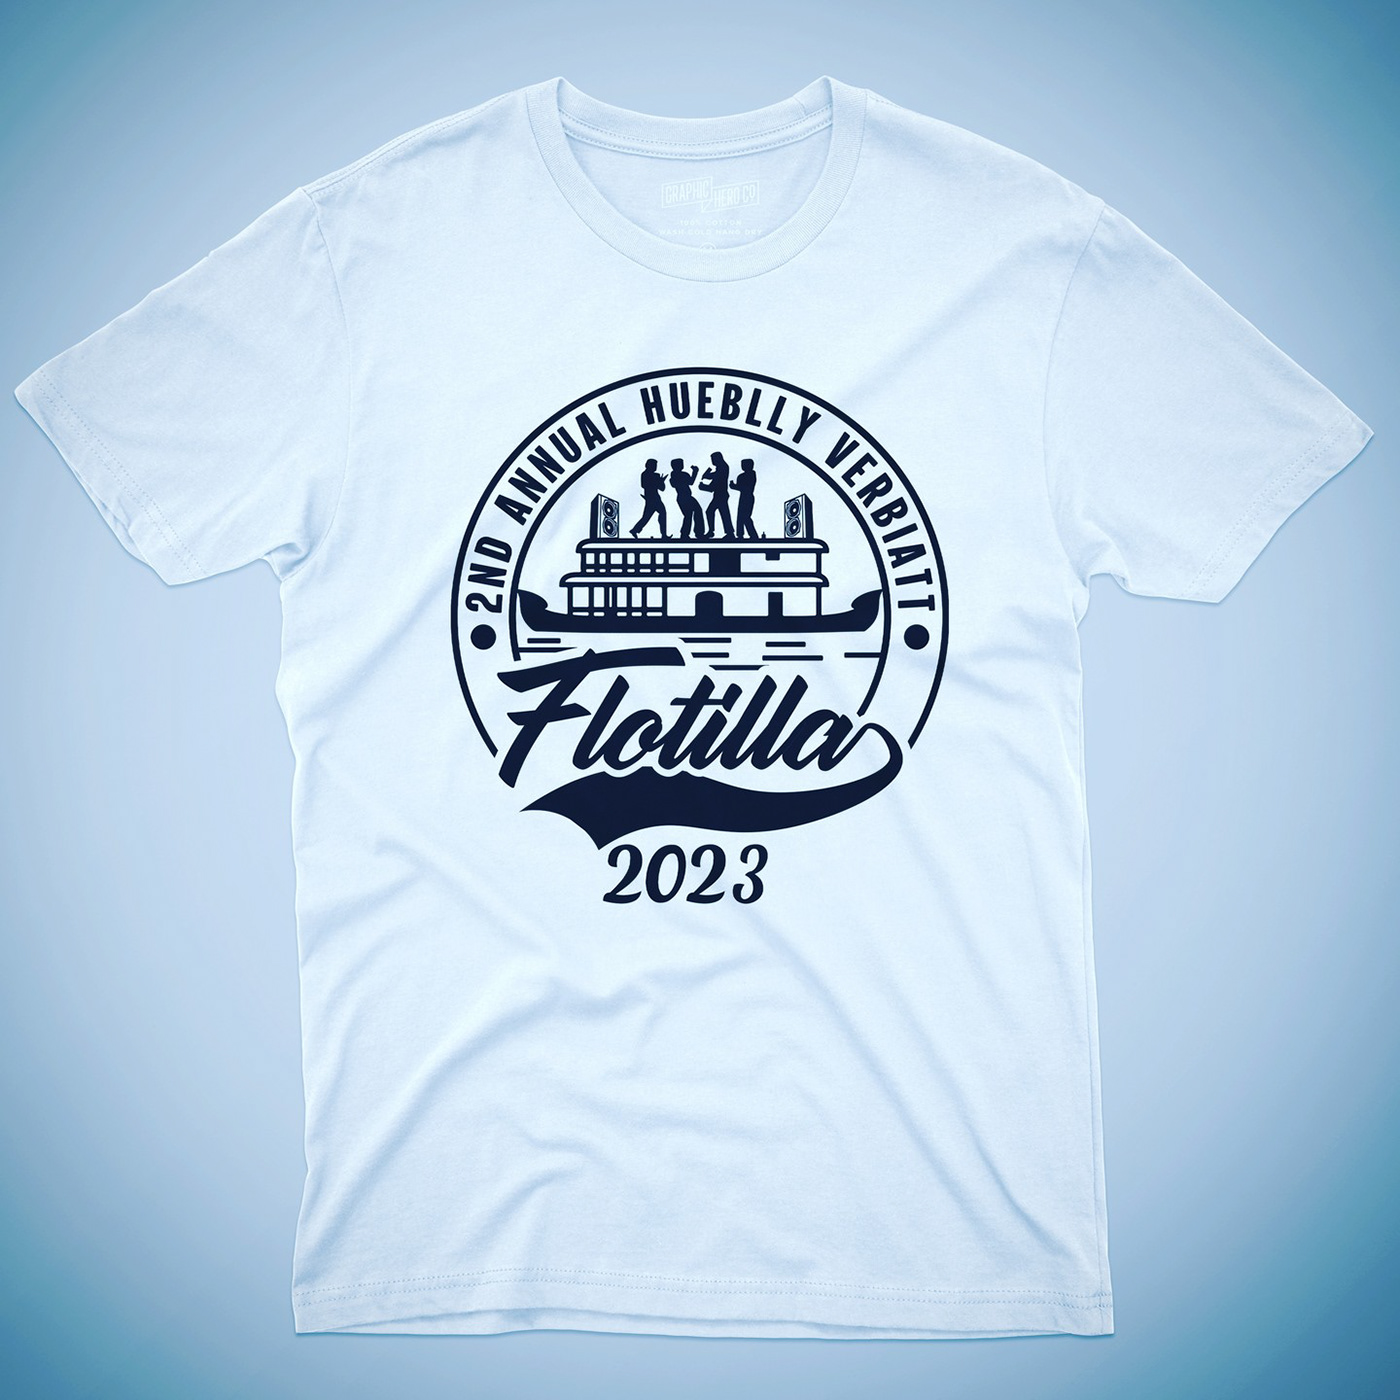 apparel Custom T Shirt Design flotilla retro t shirt T-shirt logo design Travel T shirt tshirt Tshirt Design typography t shirt vintage t-shirt